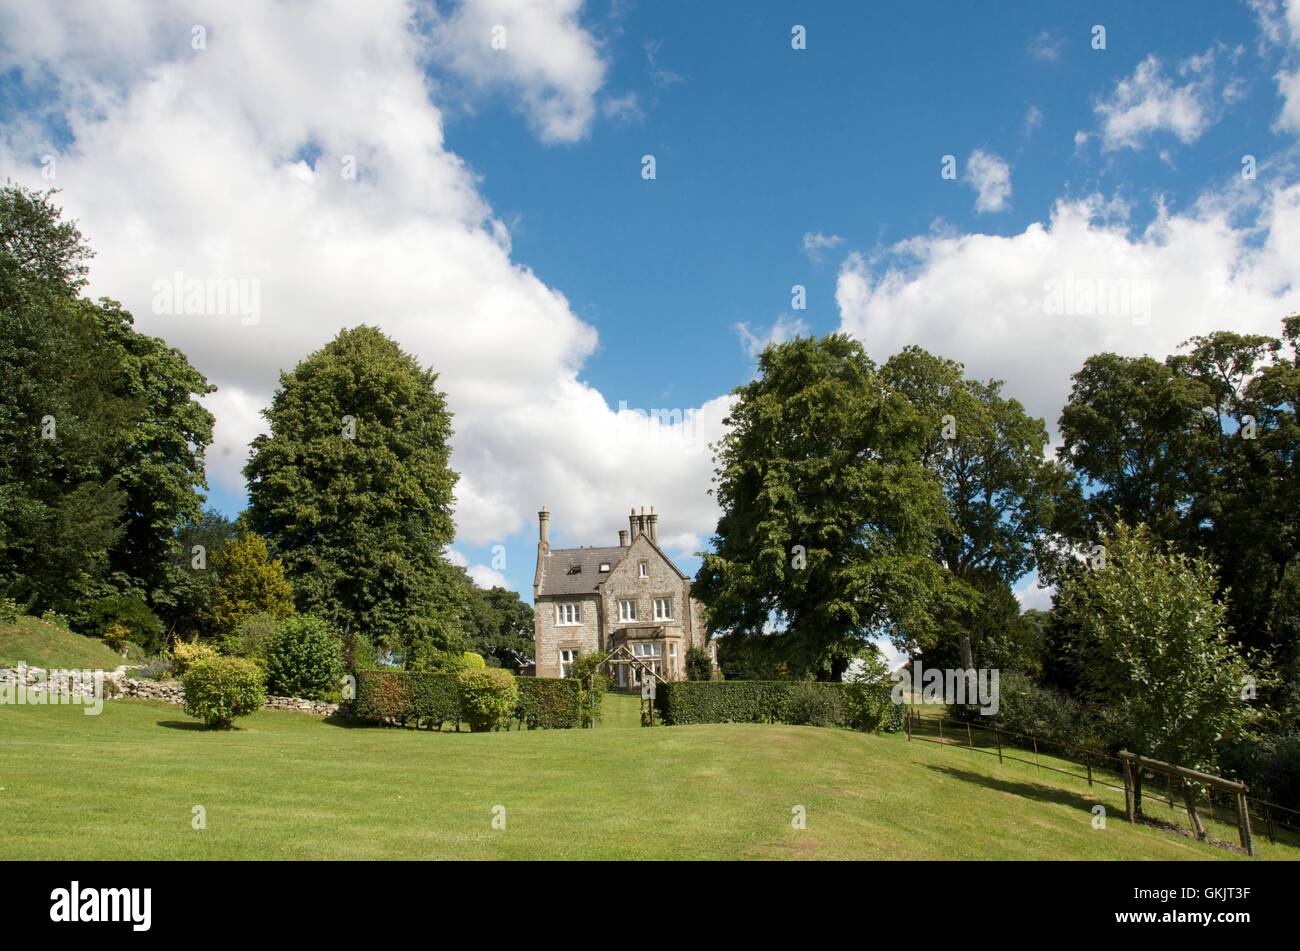 Beautiful little manor in Langrish Surrey England Stock Photo